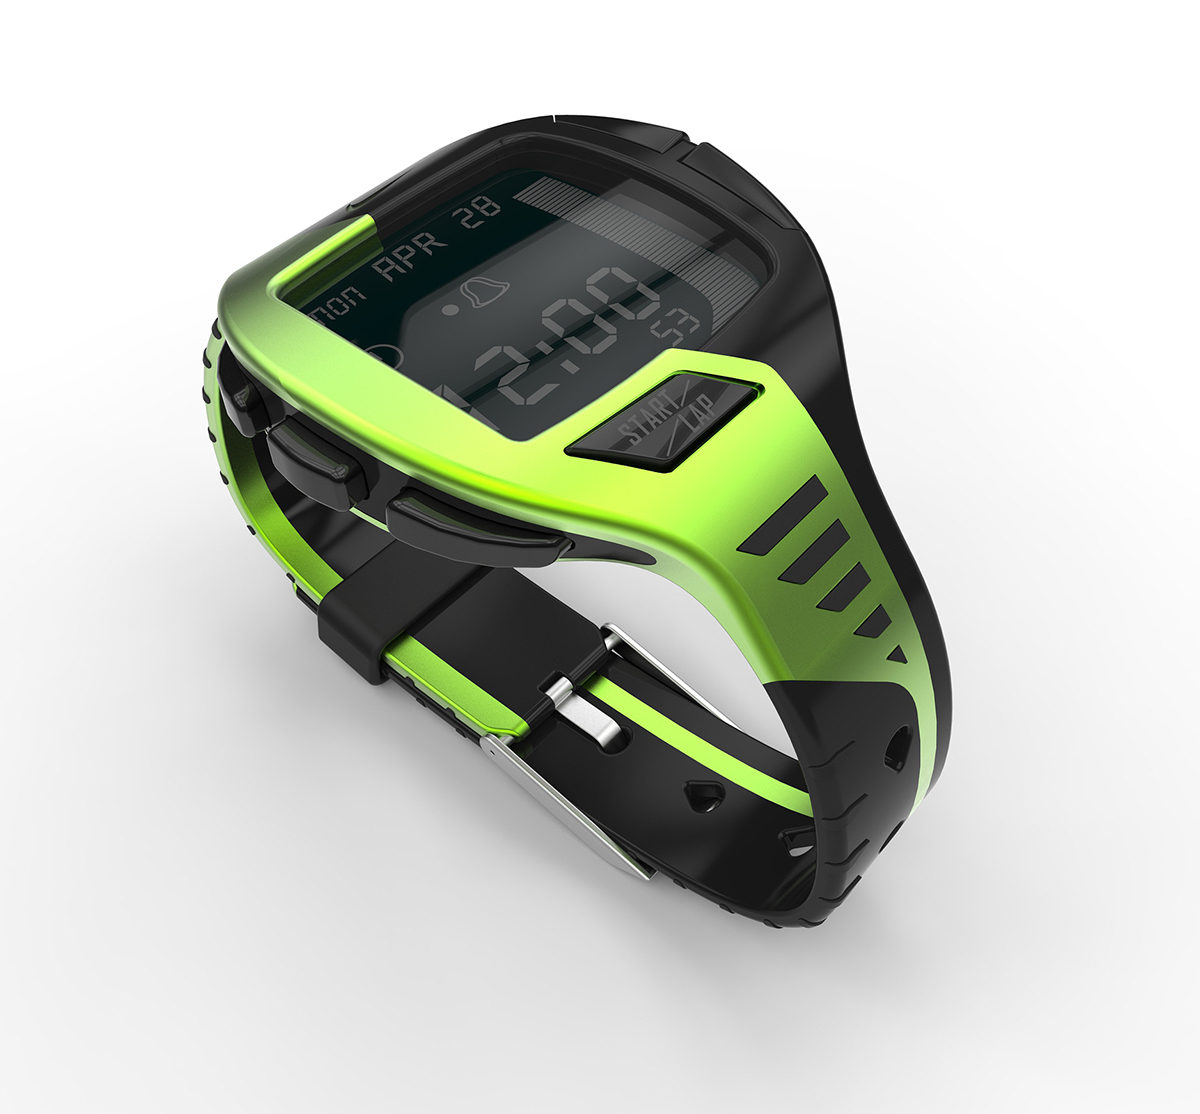 Nike watch digital sports watch package Solidworks keyshot glass plastic 3D ads sport wrist watch